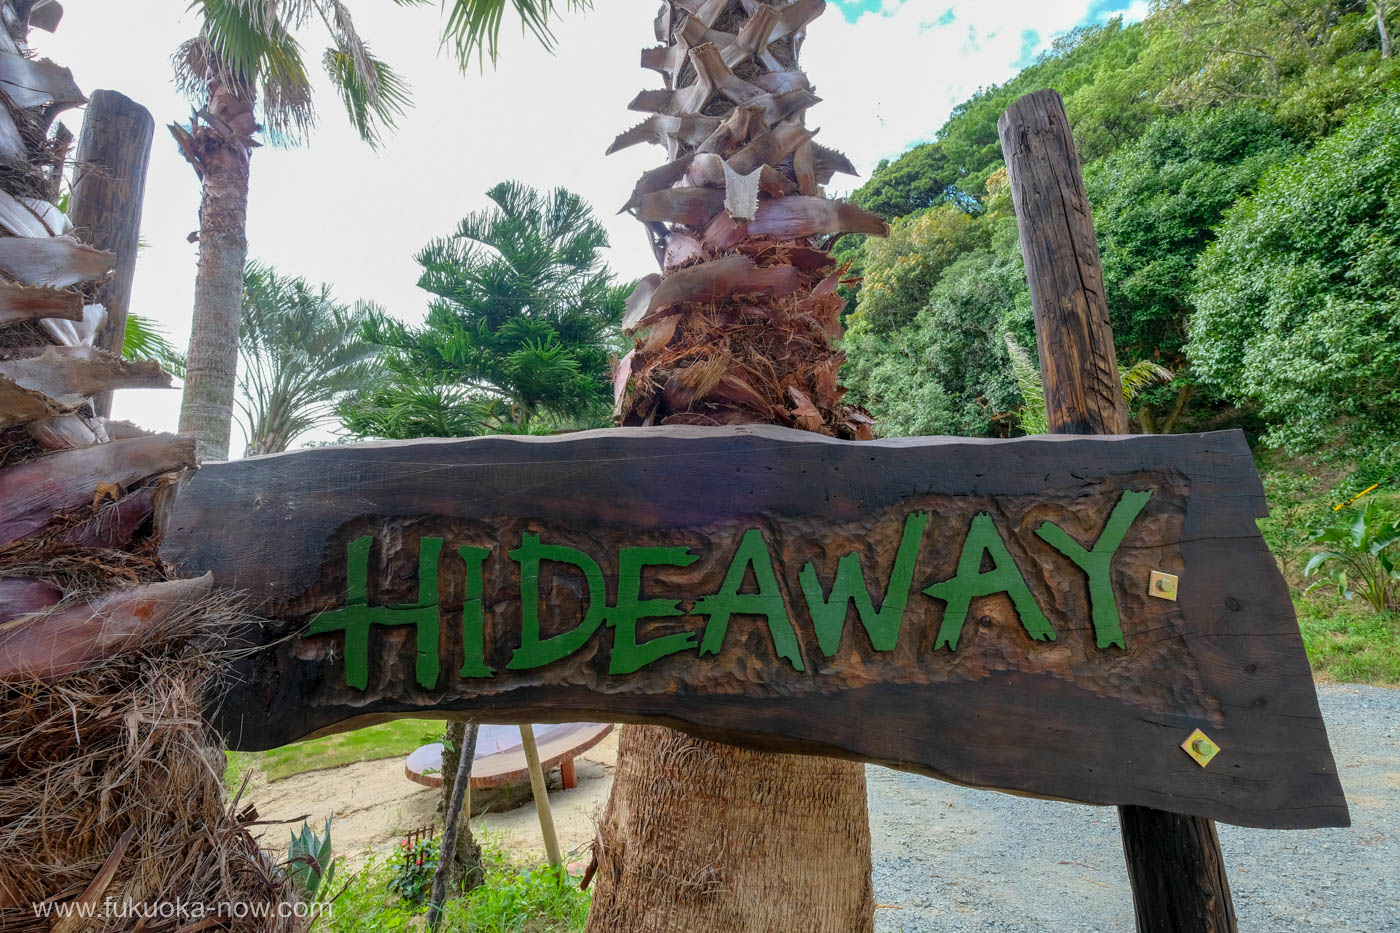 Itoshima campsite - Hideaway Sunset Camp, 糸島のキャンプ場 HIDEAWAY Sunset Camp